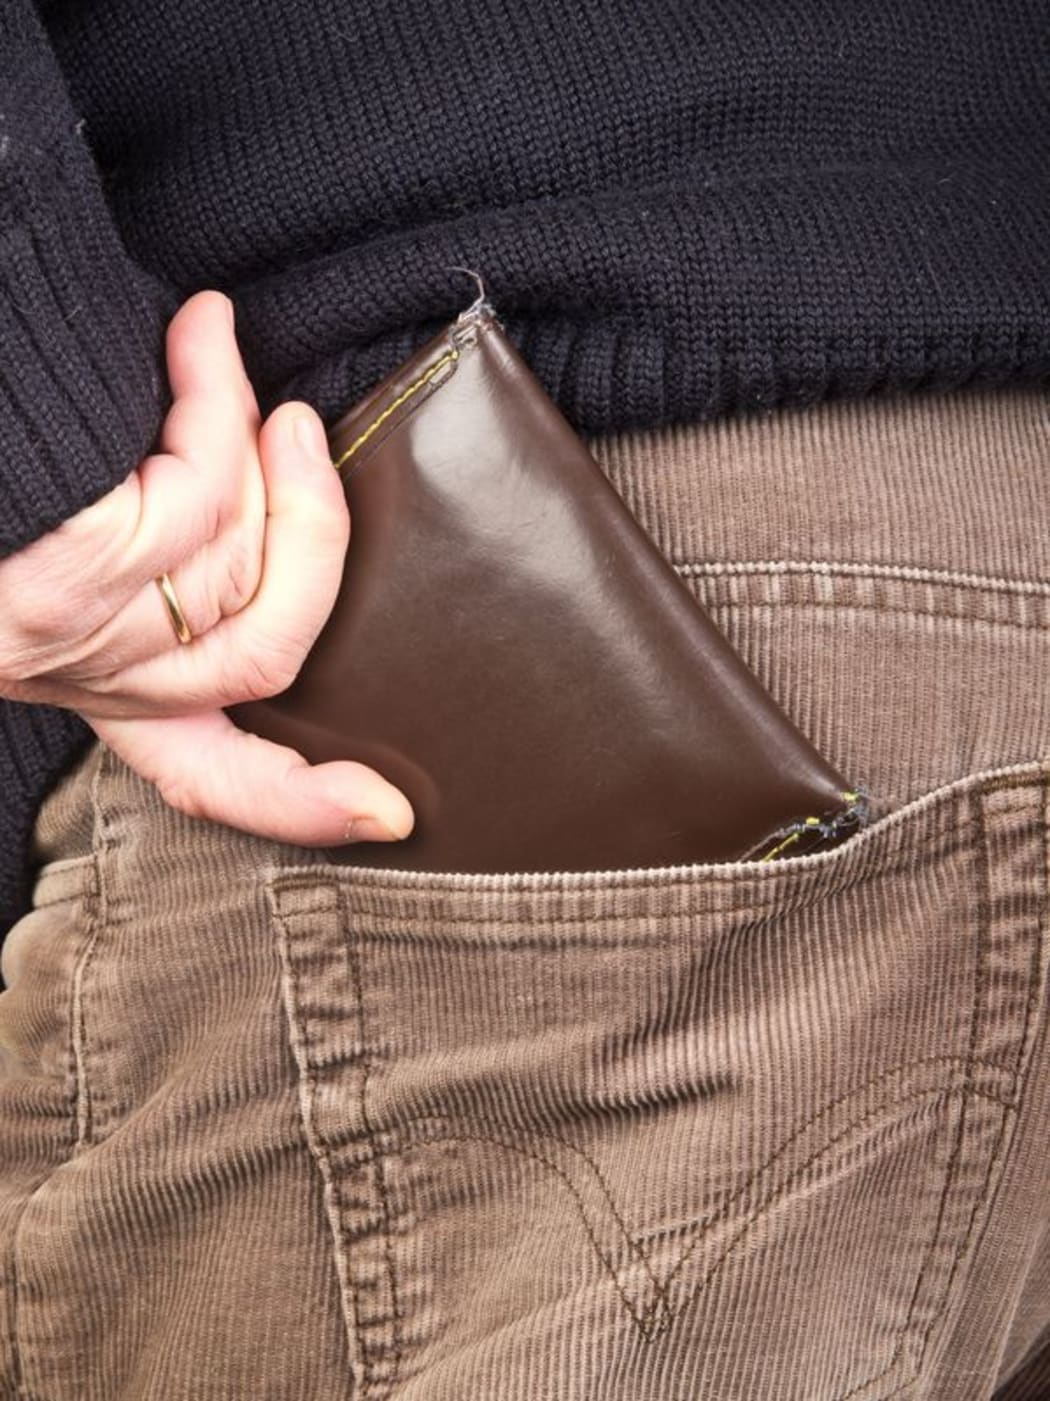 Wallet in pocket